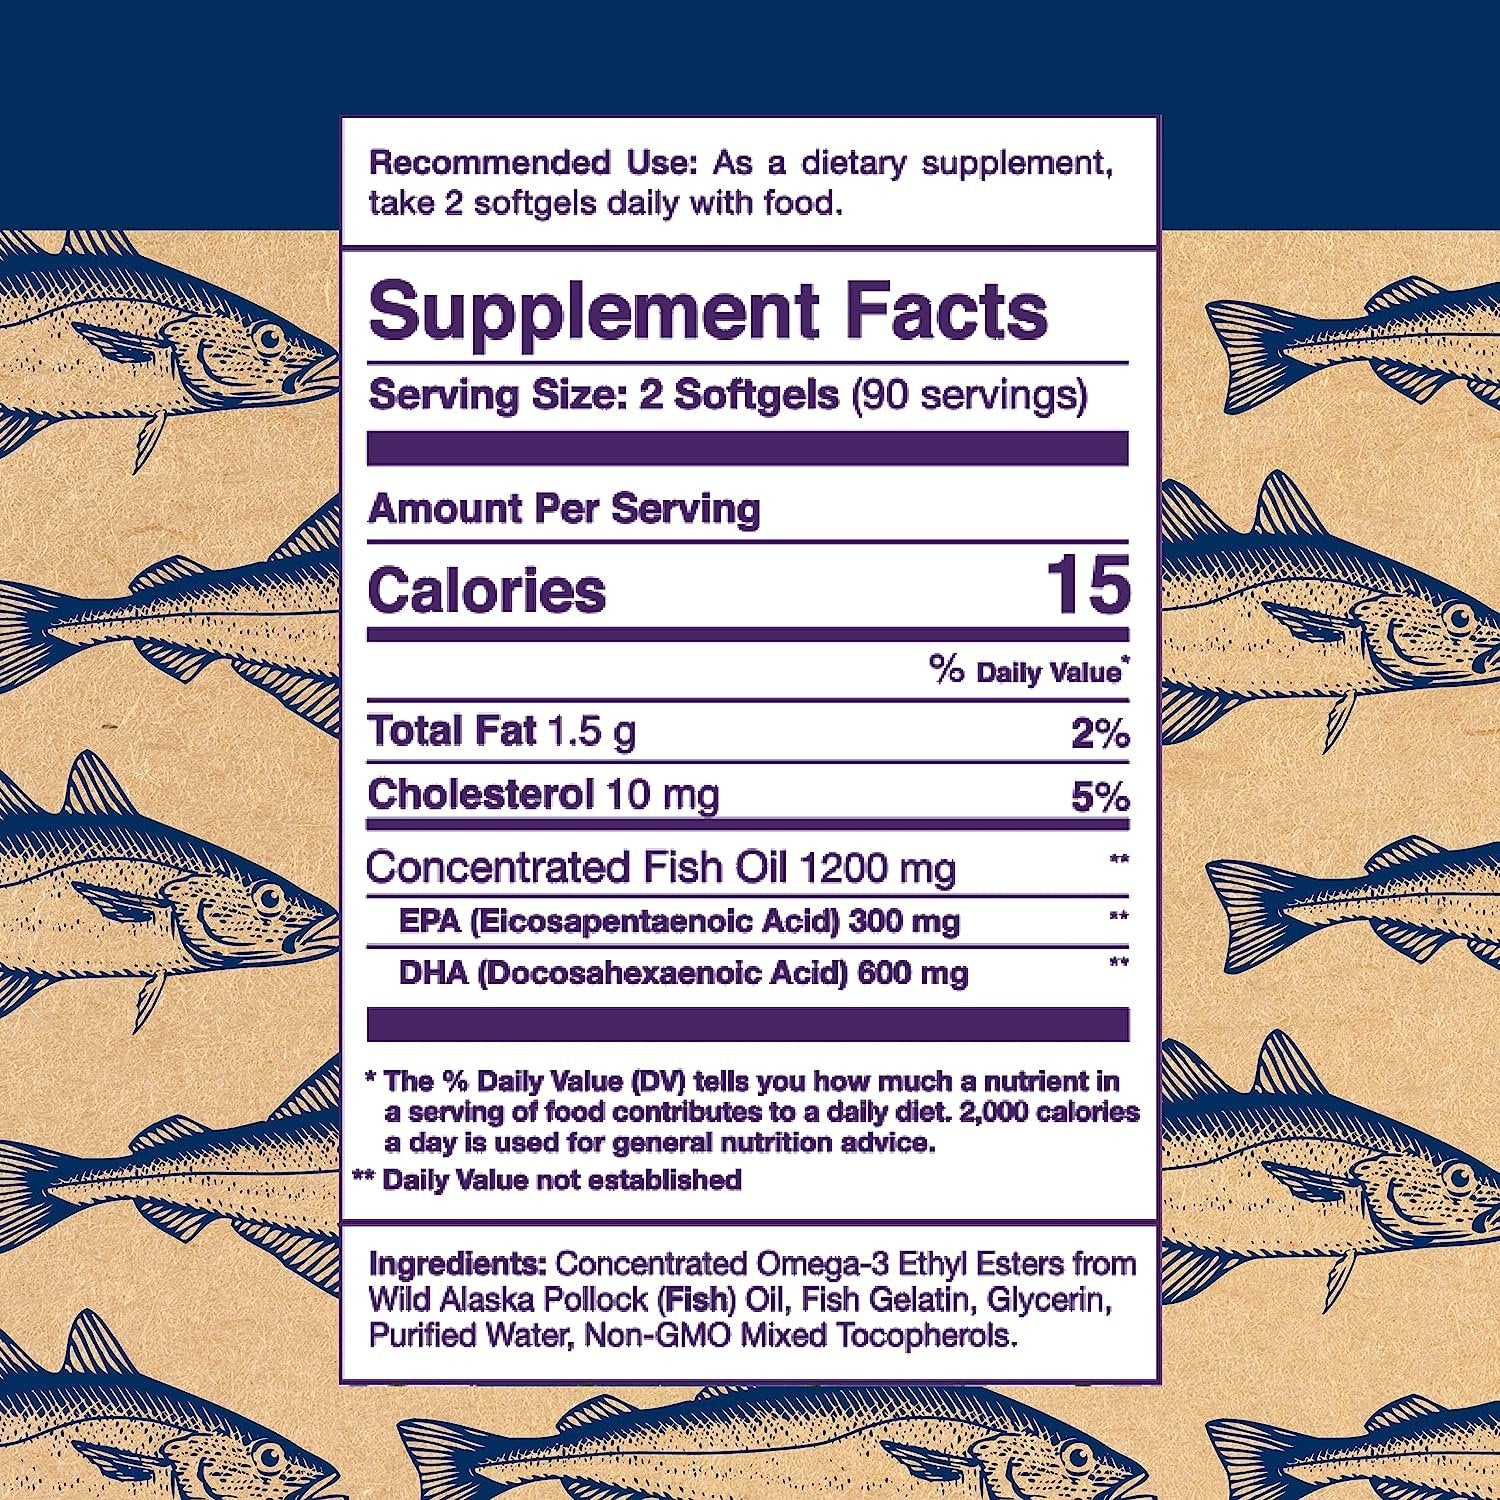 Wiley's Finest Wild Alaskan Fish Oil Prenatal DHA - 600mg DHA Omega-3s - 180 Softgels (90 Prenatal Vitamin Servings)